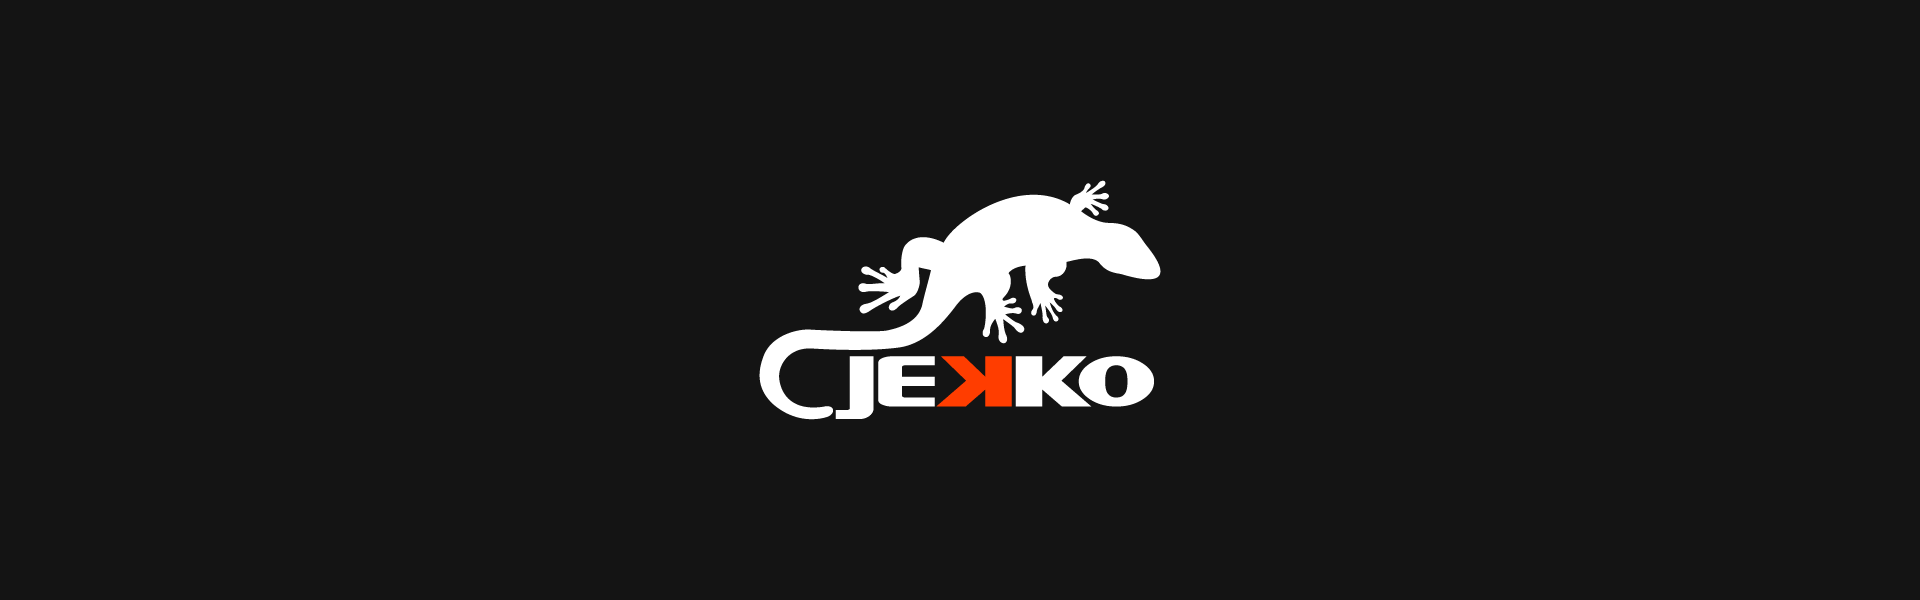 Il nuovo sito web Jekko: Made for liftingheroes